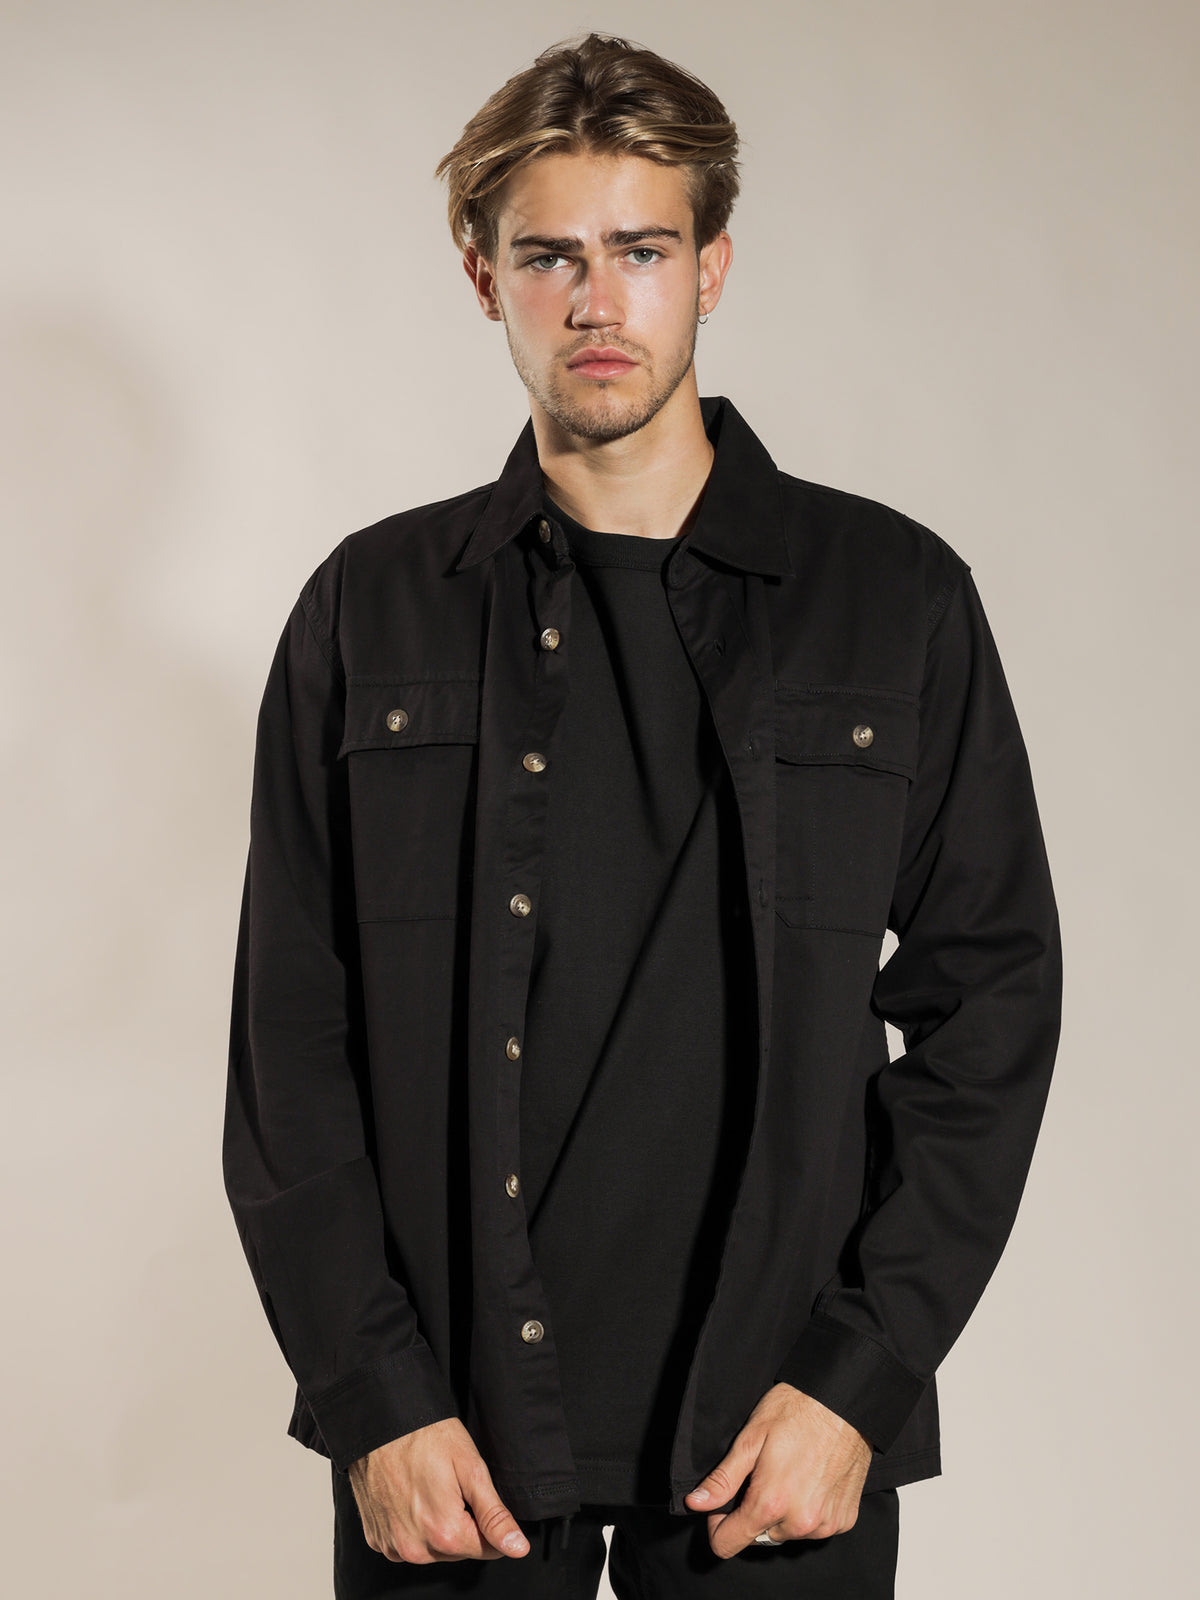 Asher Workwear Long Sleeve Shirt in Black